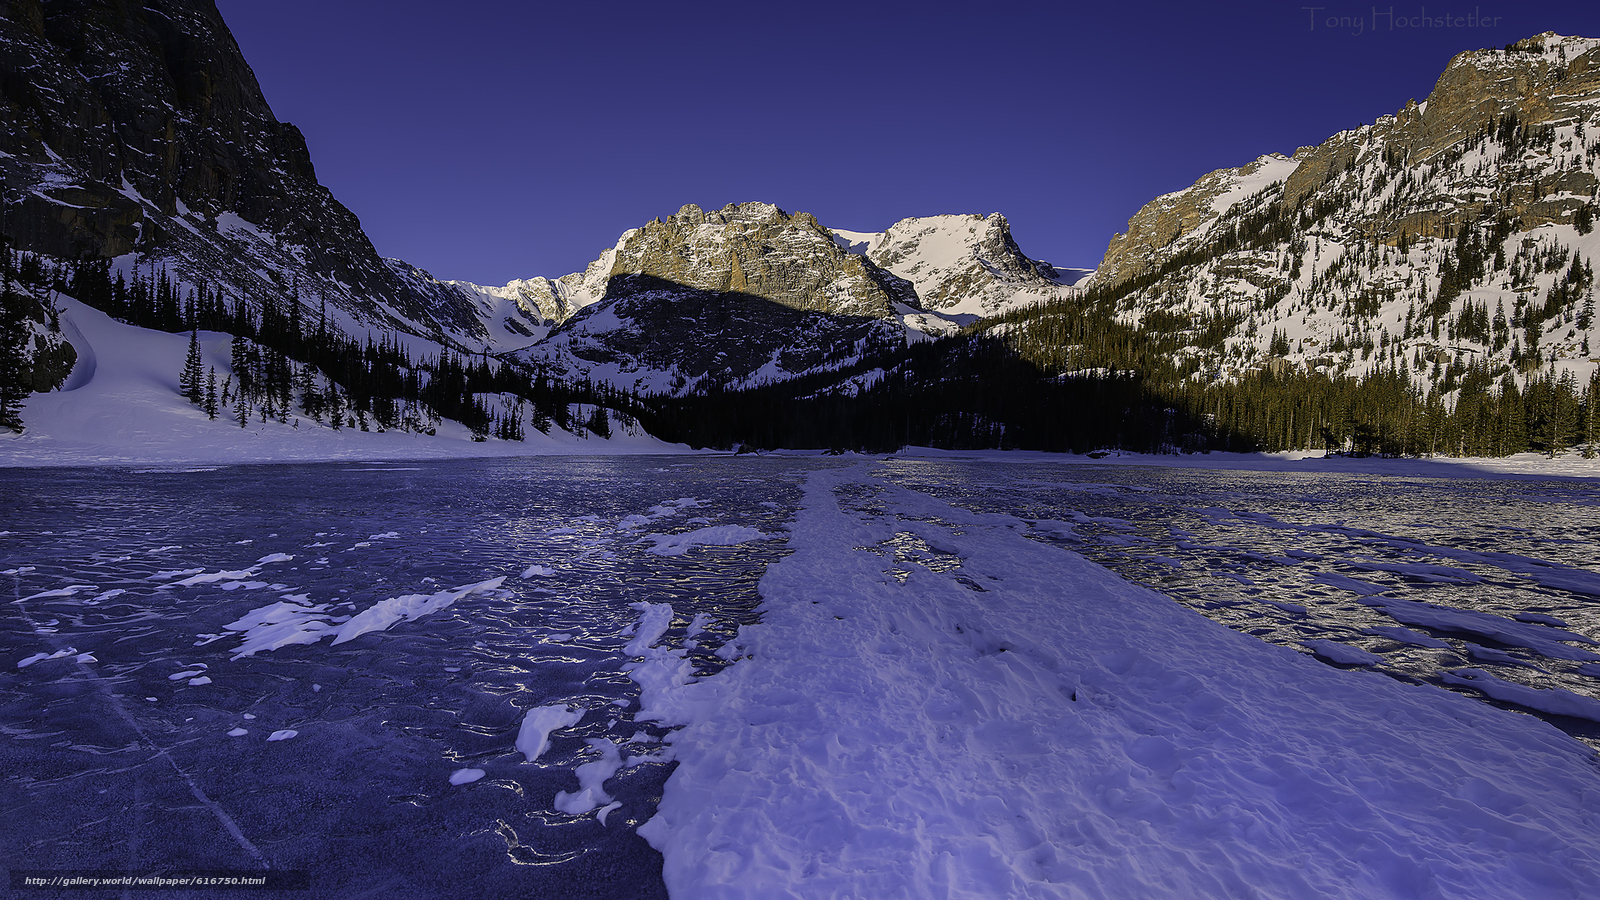 Download wallpaper Rocky Mountain National Park lake ice Mountains